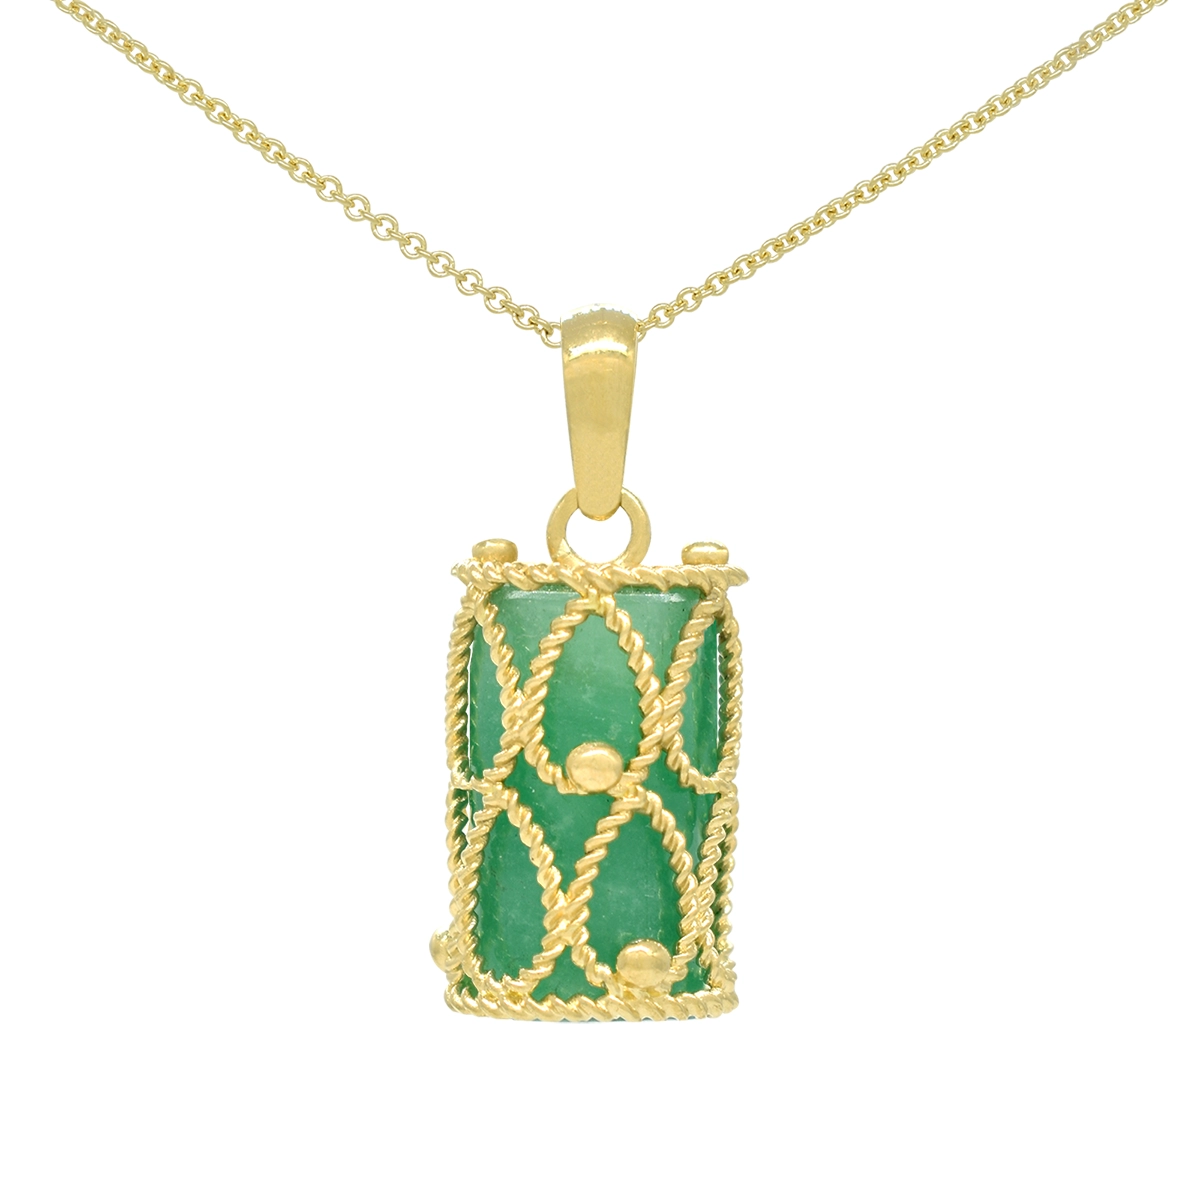 11.40 Carats Emerald in 18K Gold Filigree Pendant